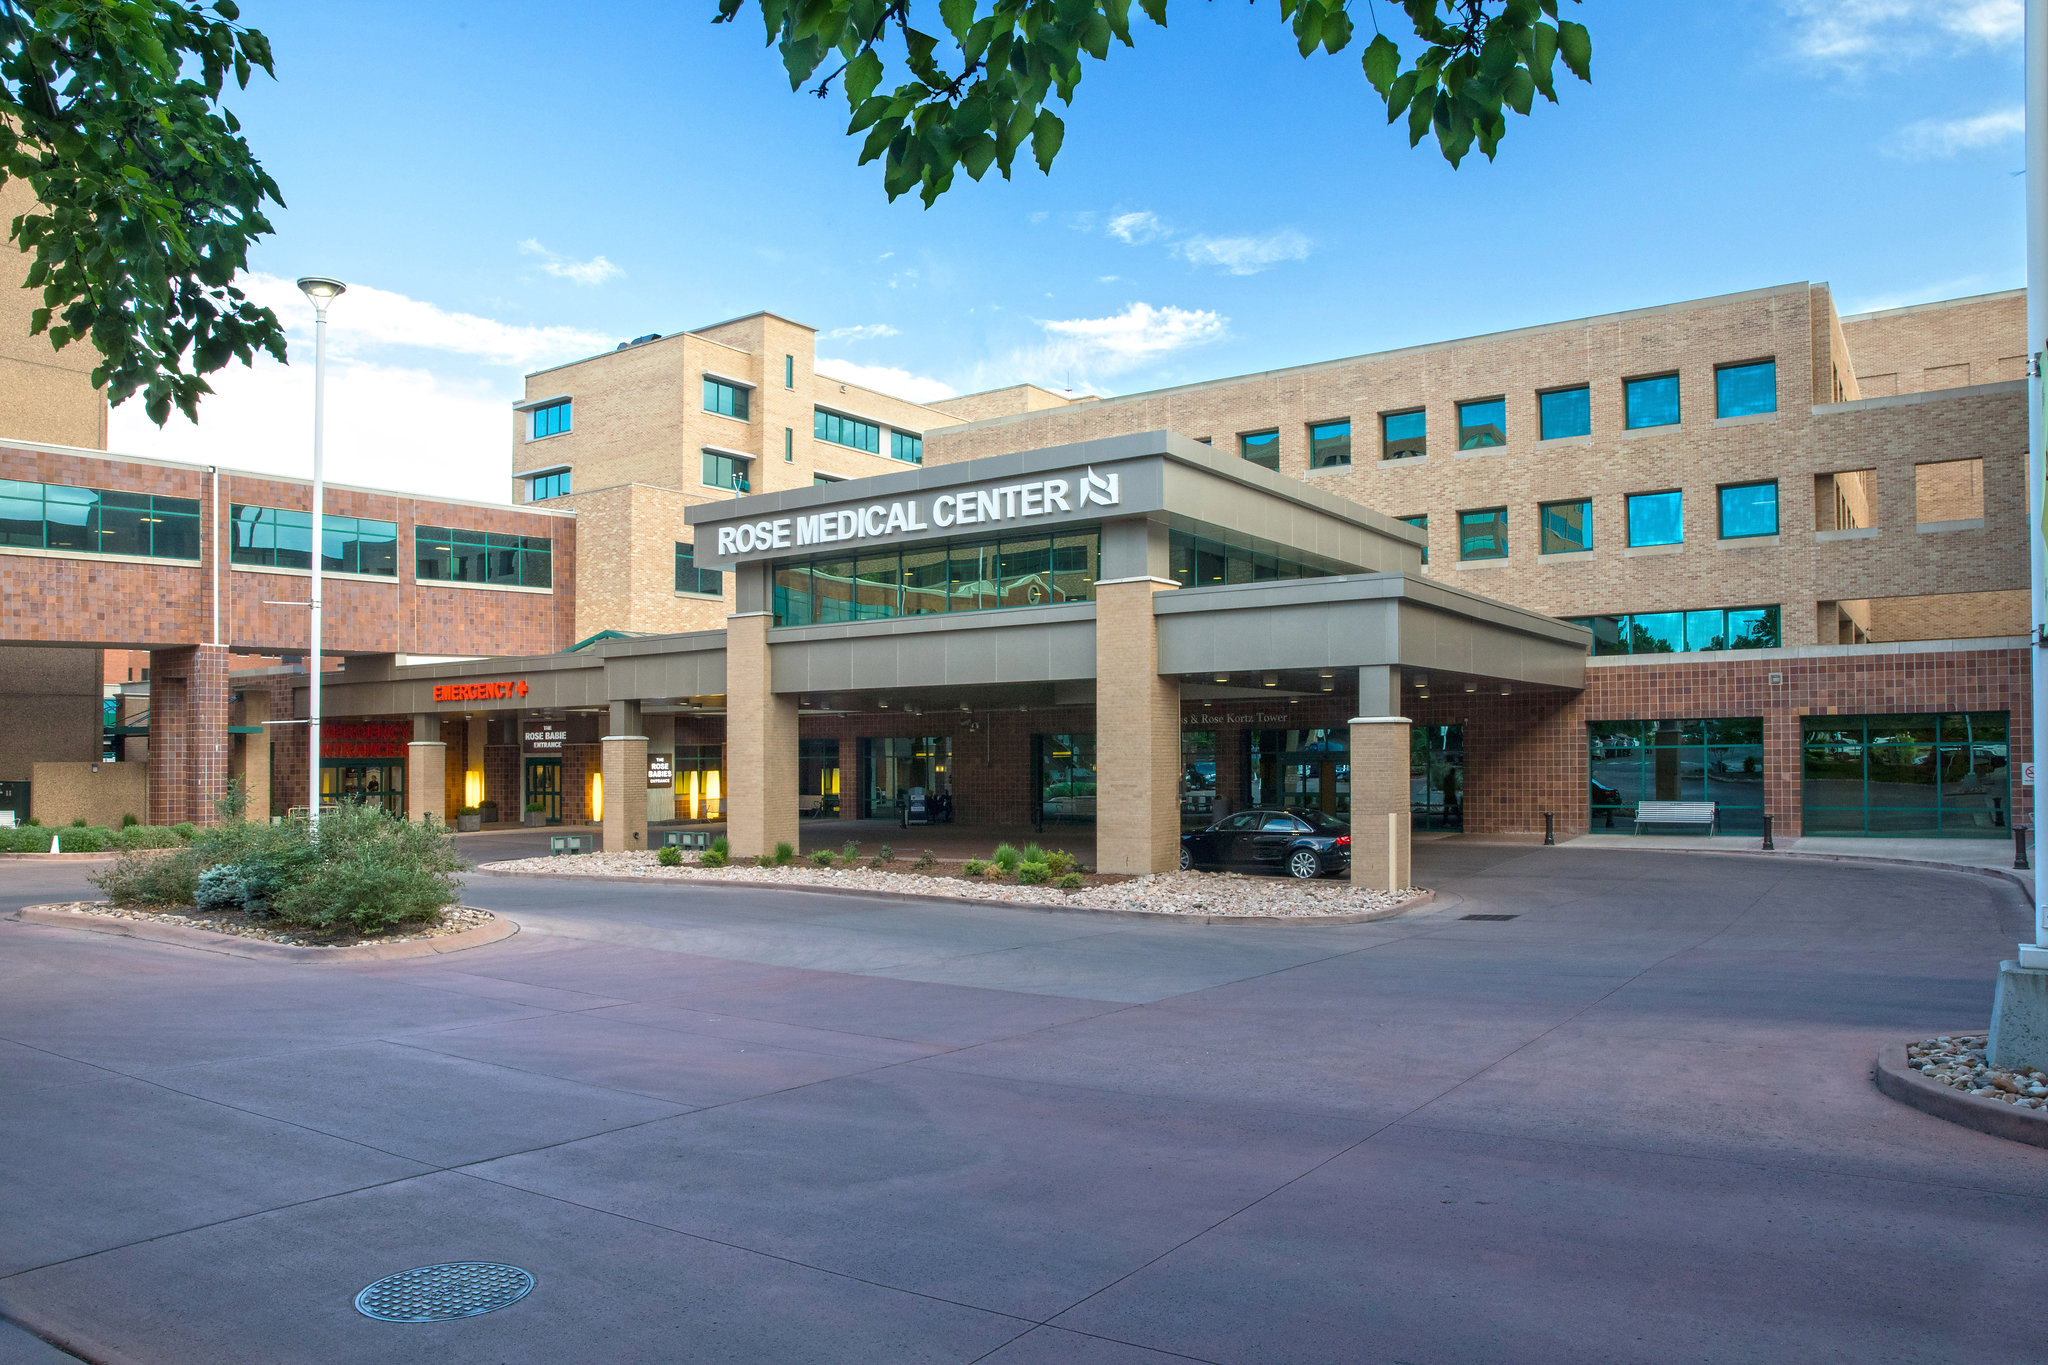 The entrance of Rose Medical Center in Denver, Colorado